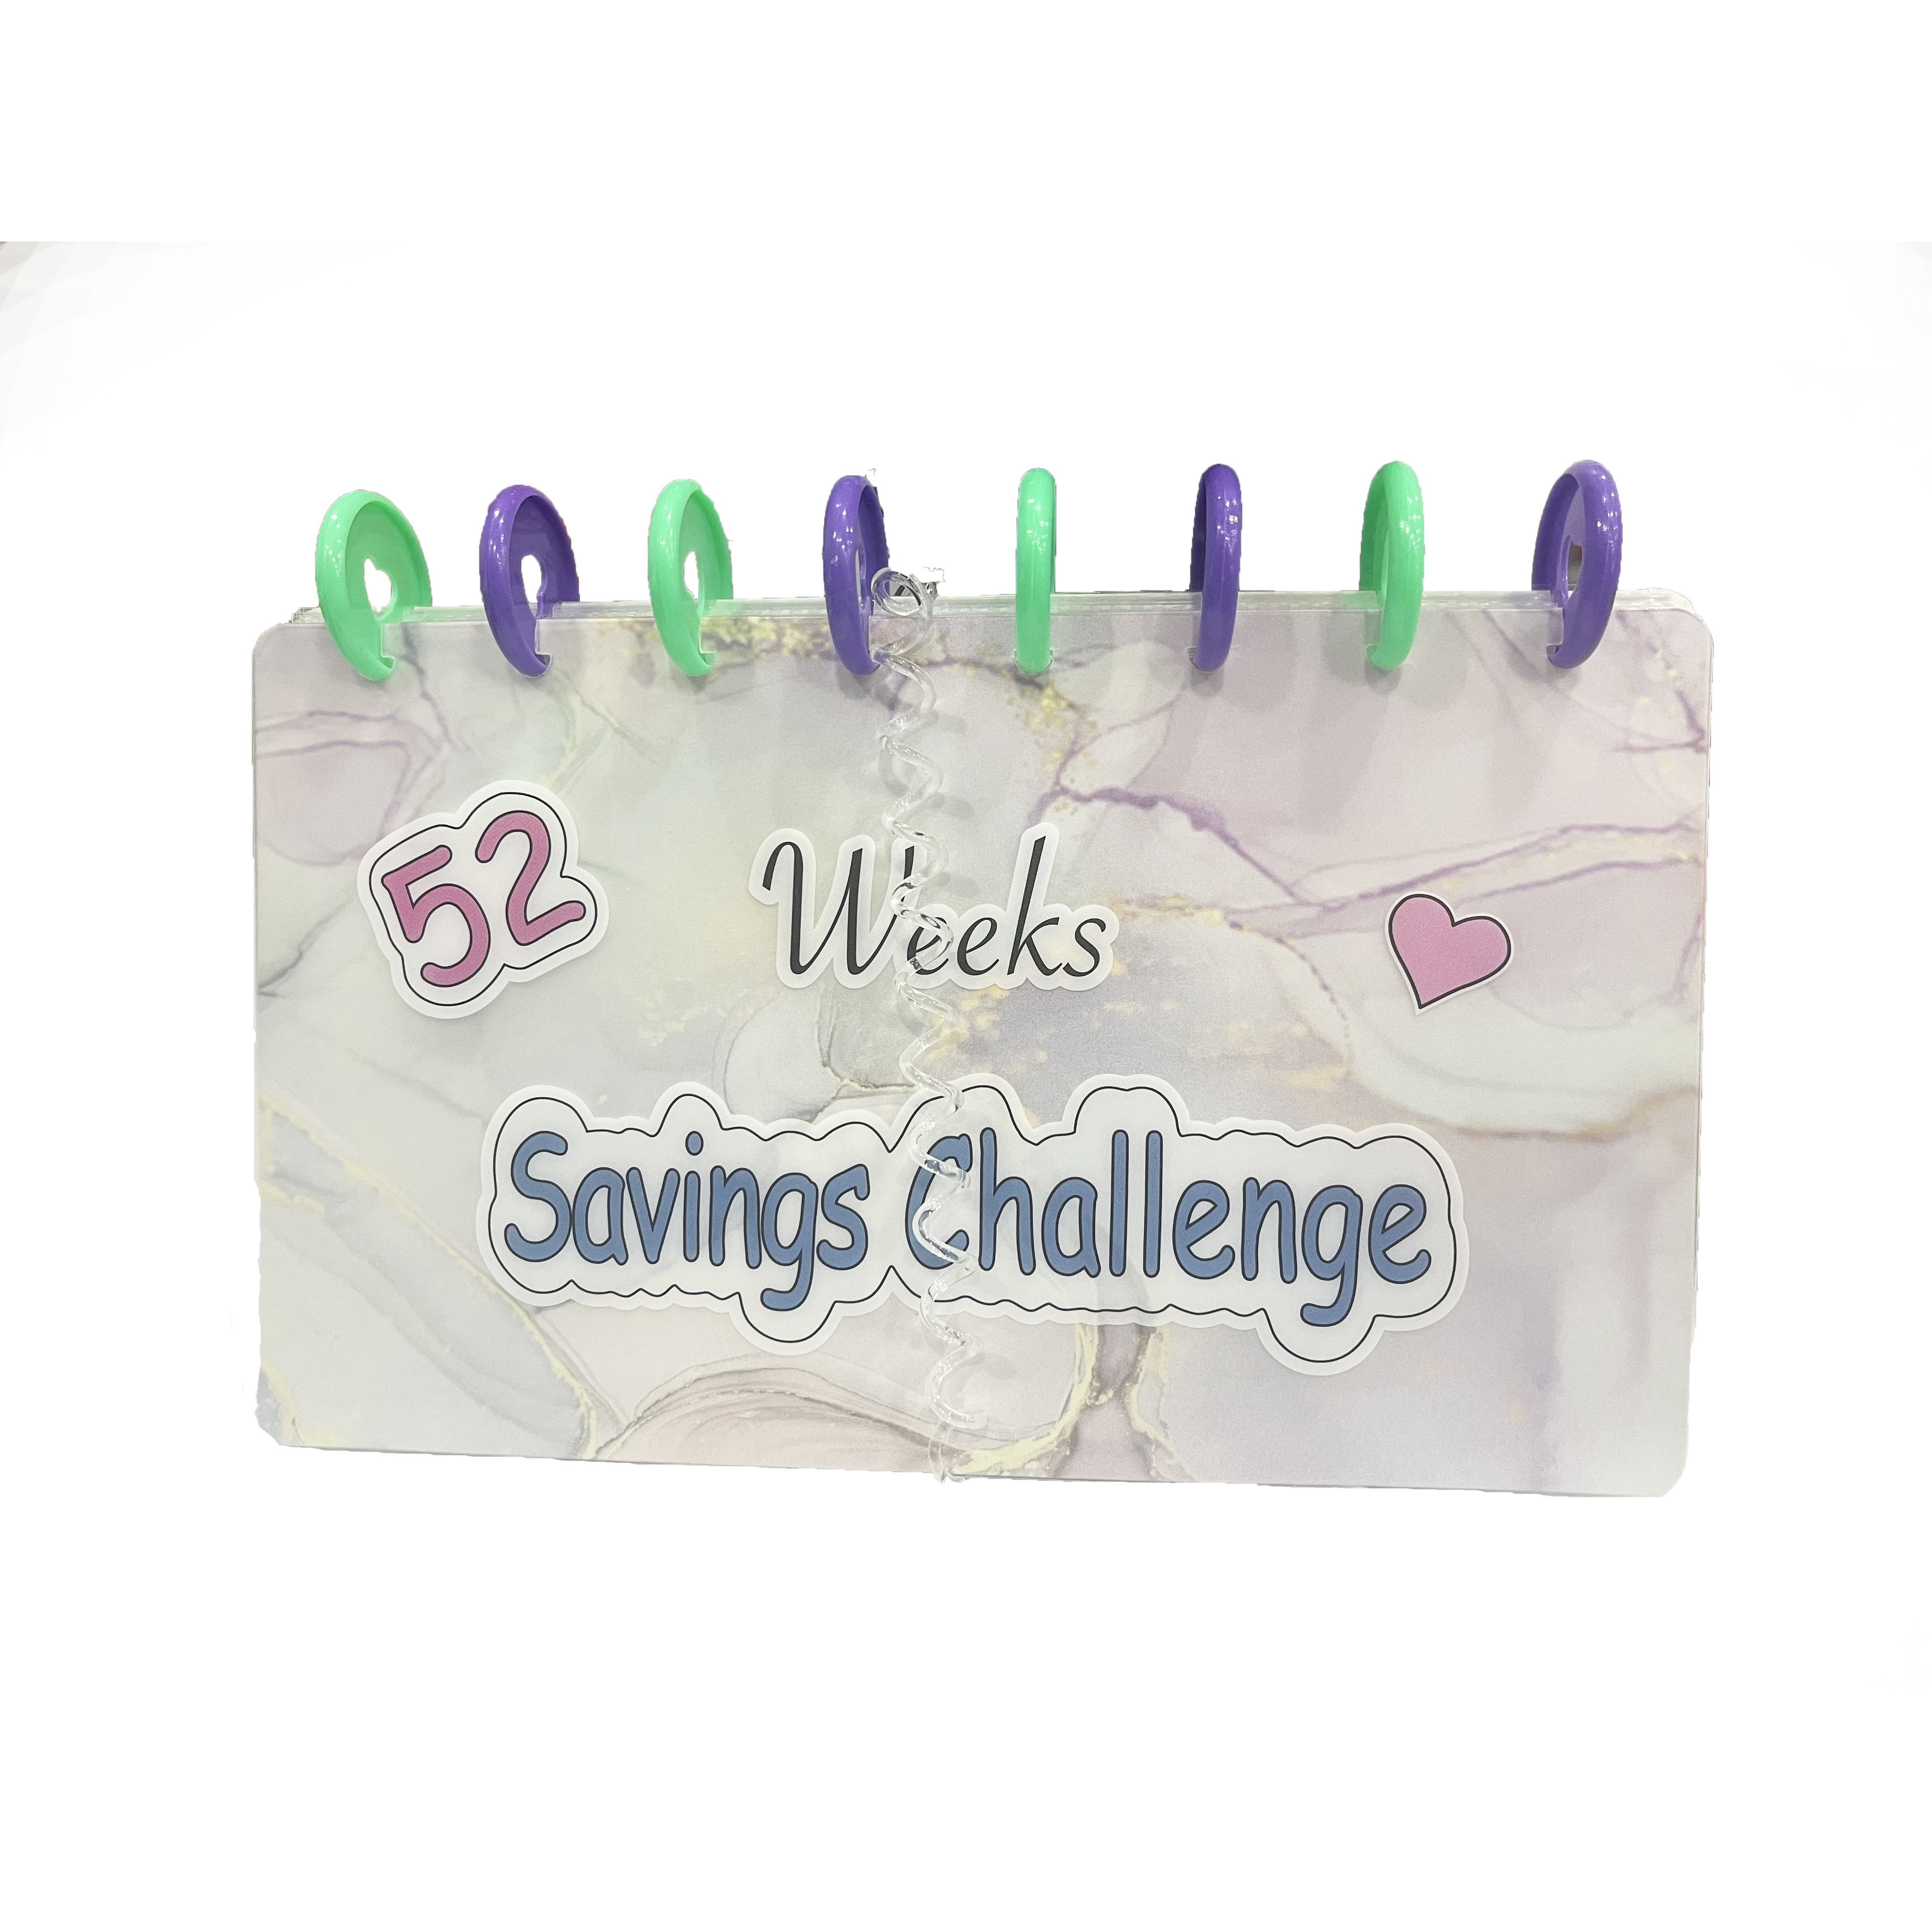 Savings Binder l 52 Weeks Savings Challenge Budget binder Money